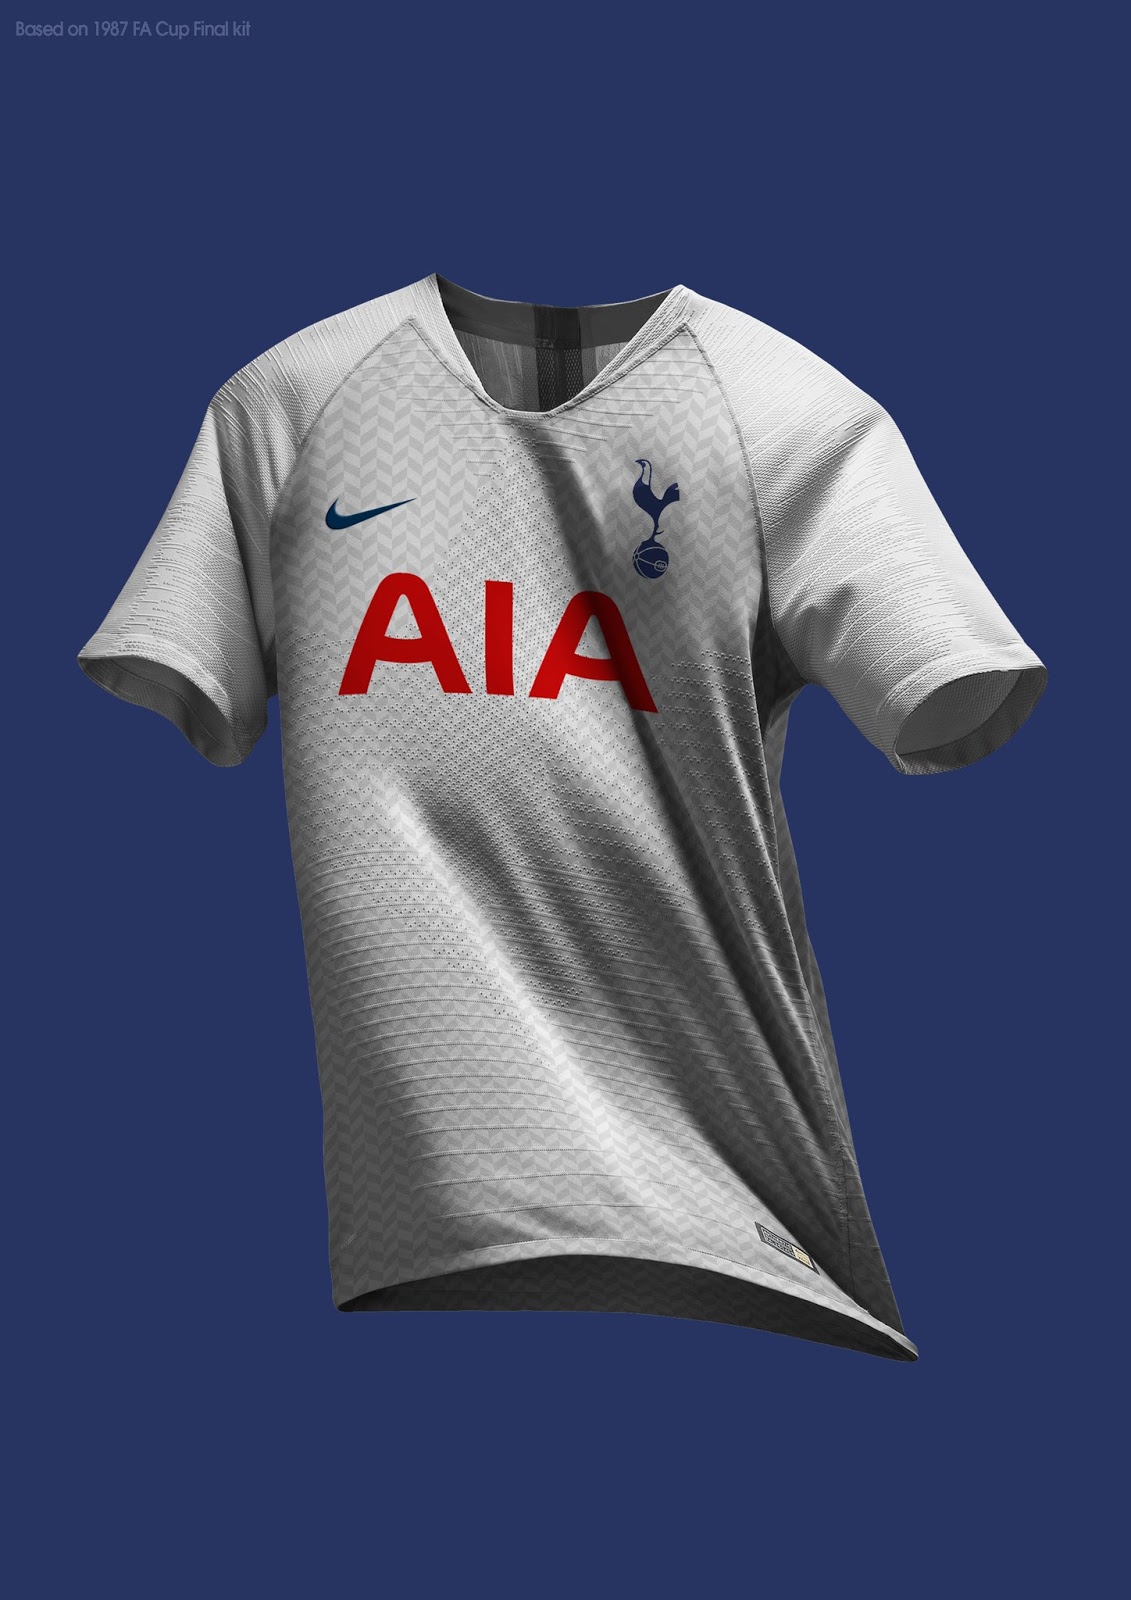 Nike Launch Spurs 2019/20 Home & Away Shirts - SoccerBible